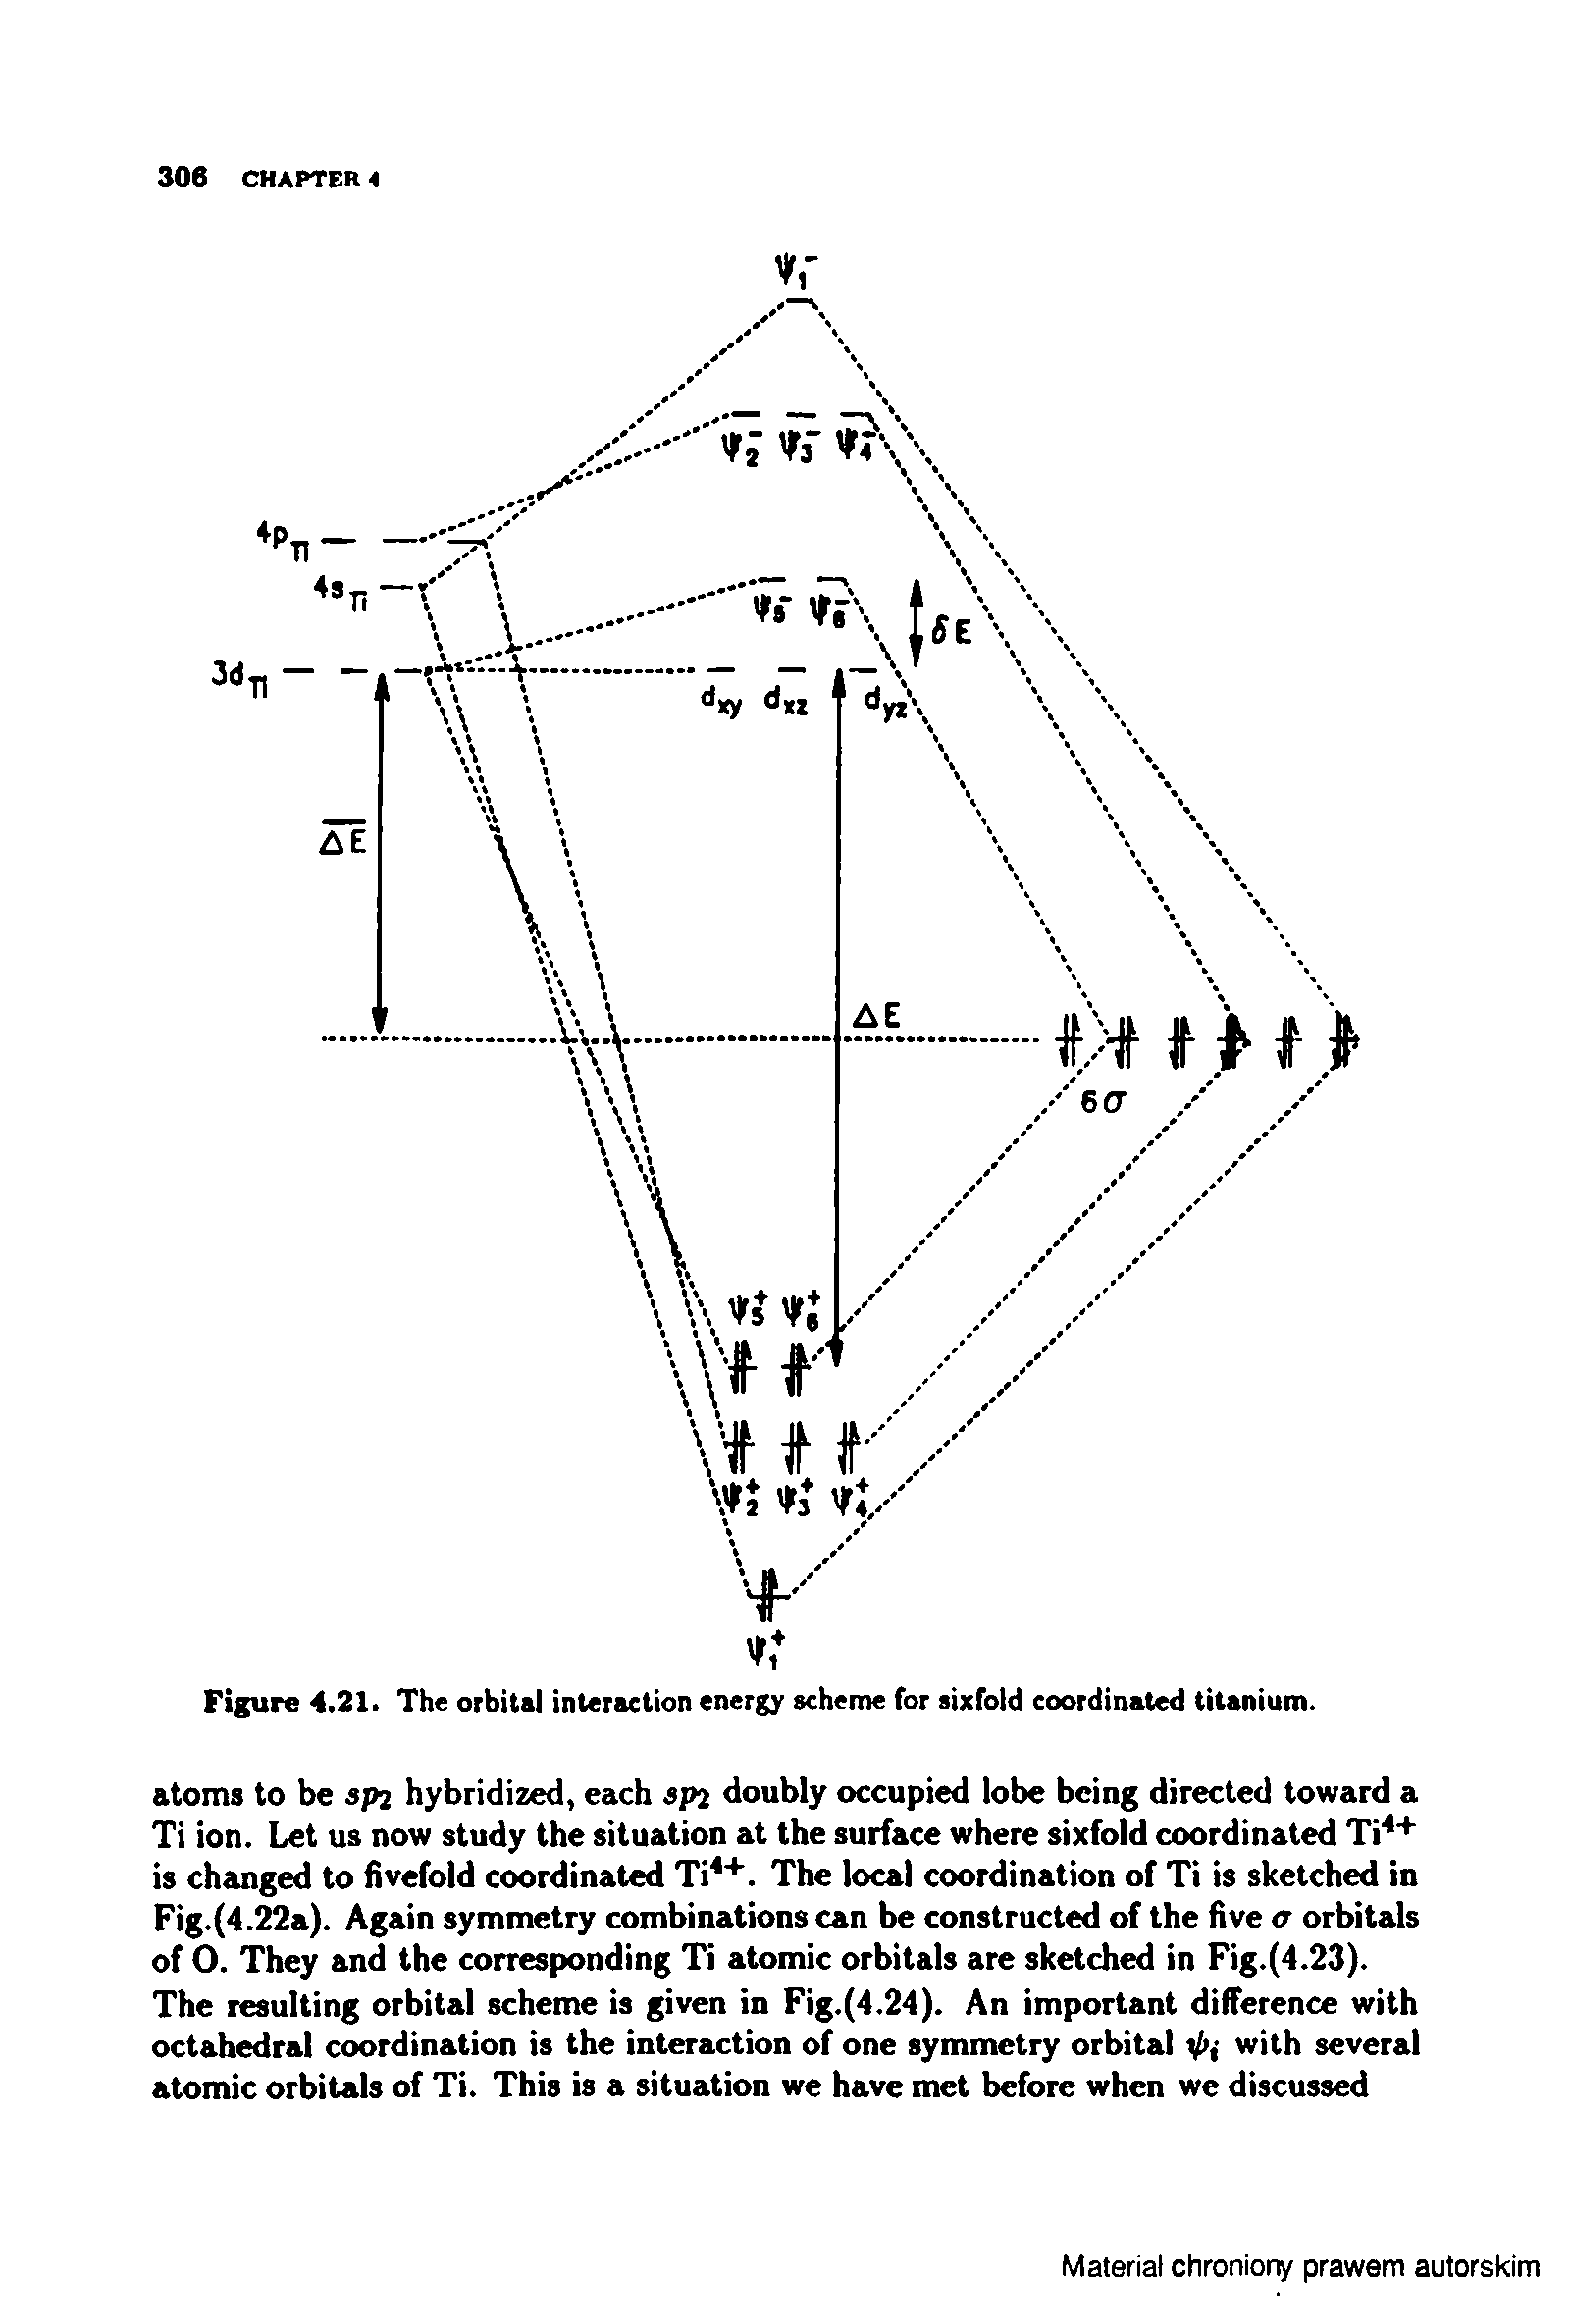 Figure 4.21. The orbital interaction energy scheme for sixfold coordinated titanium.